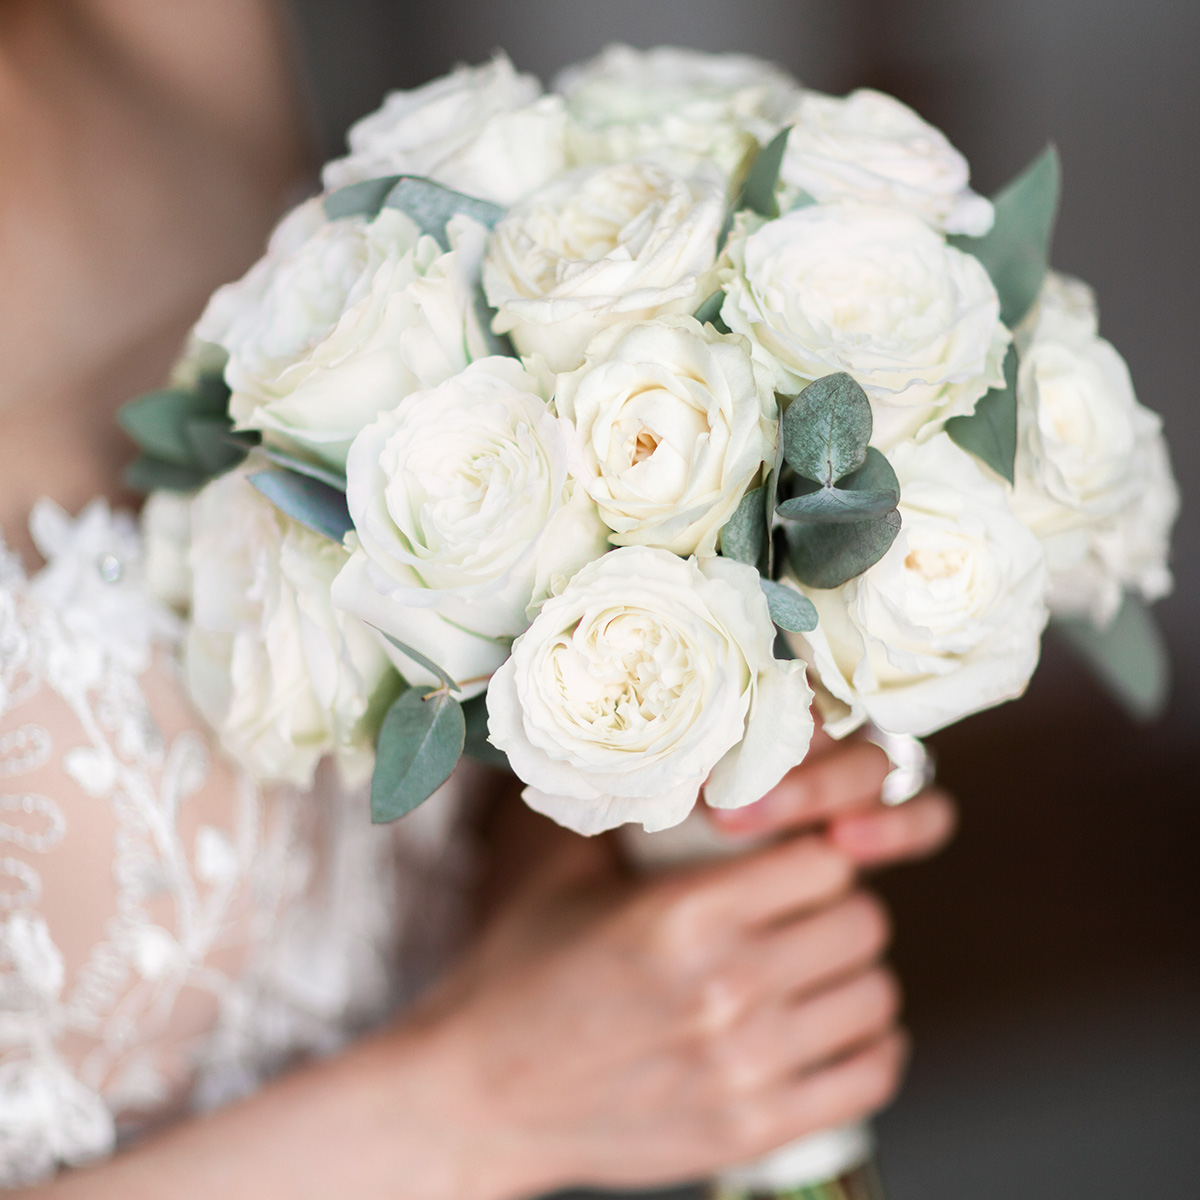 21 Wedding Flower Arrangements for Your Decor Checklist